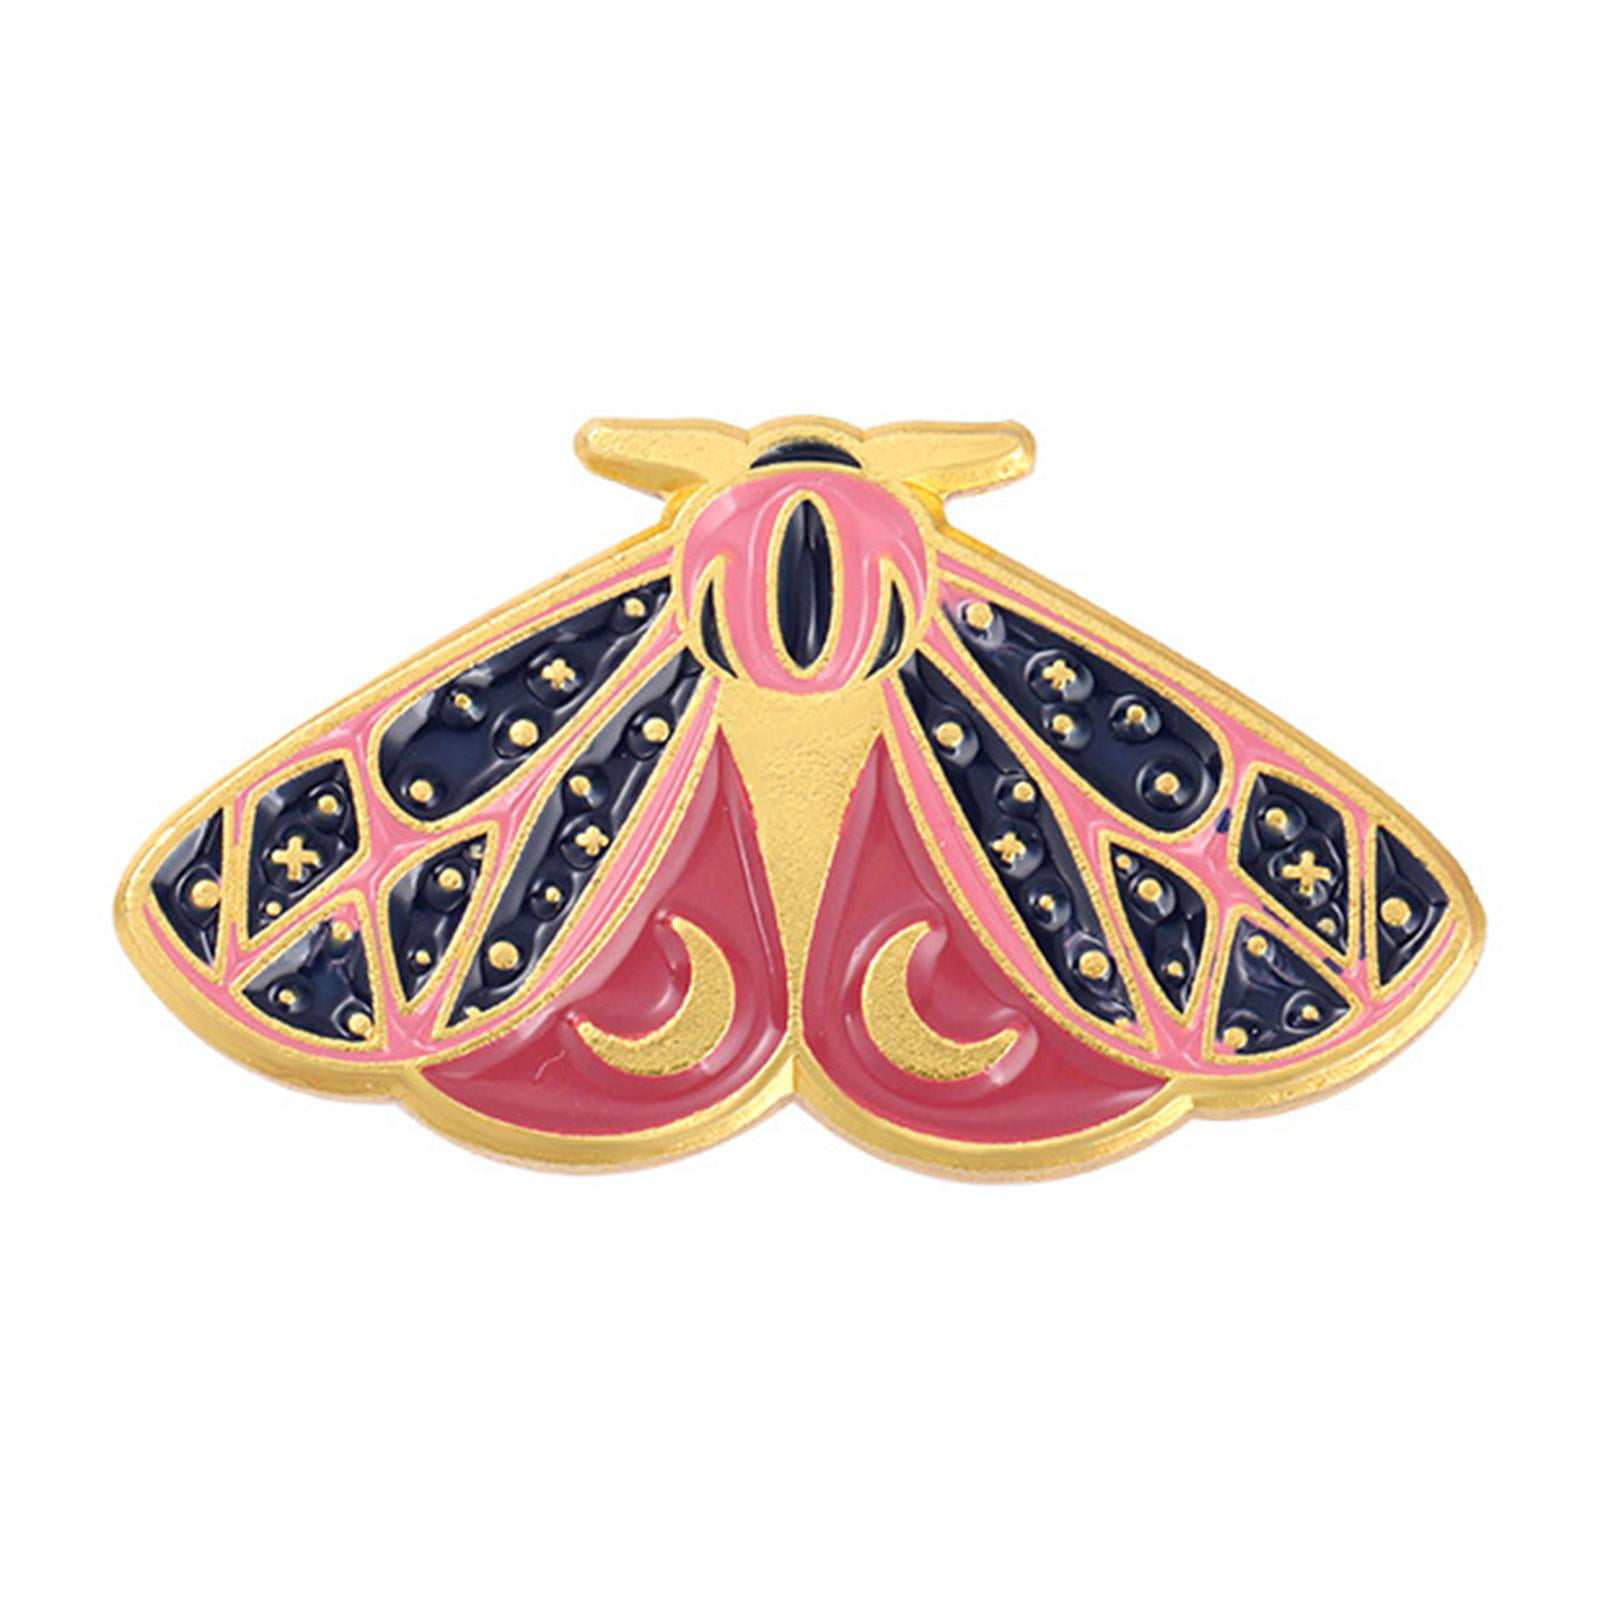 5pcs Exquisite Moth Enamel Pin Collection Animal Badges Lapel Pins